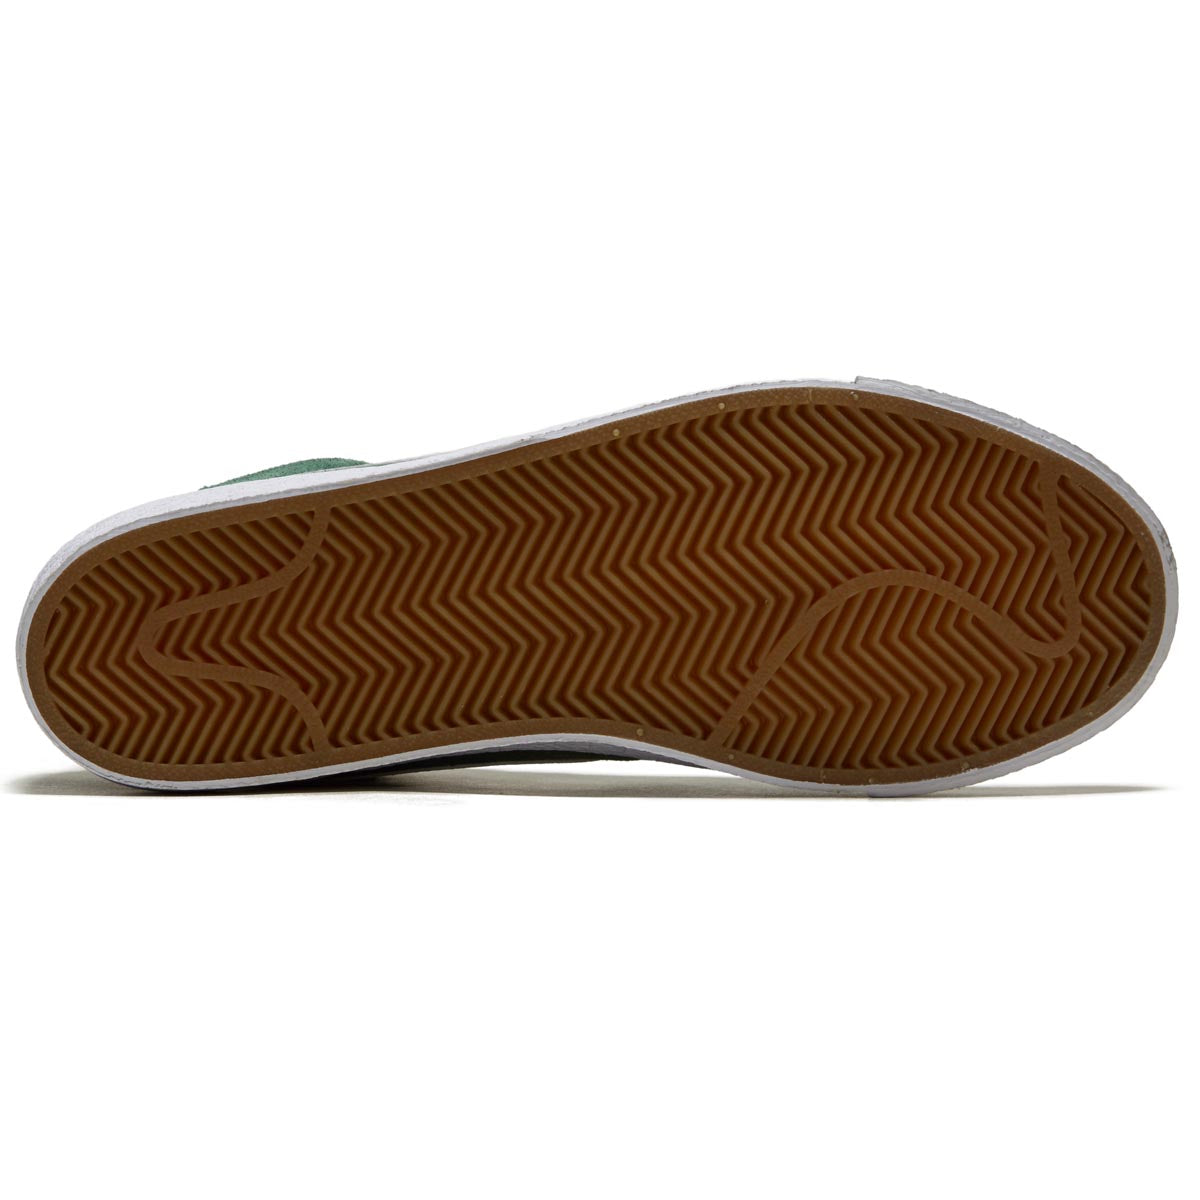 Nike SB Zoom Blazer Mid Shoes - Fir/White/Fir/White image 4